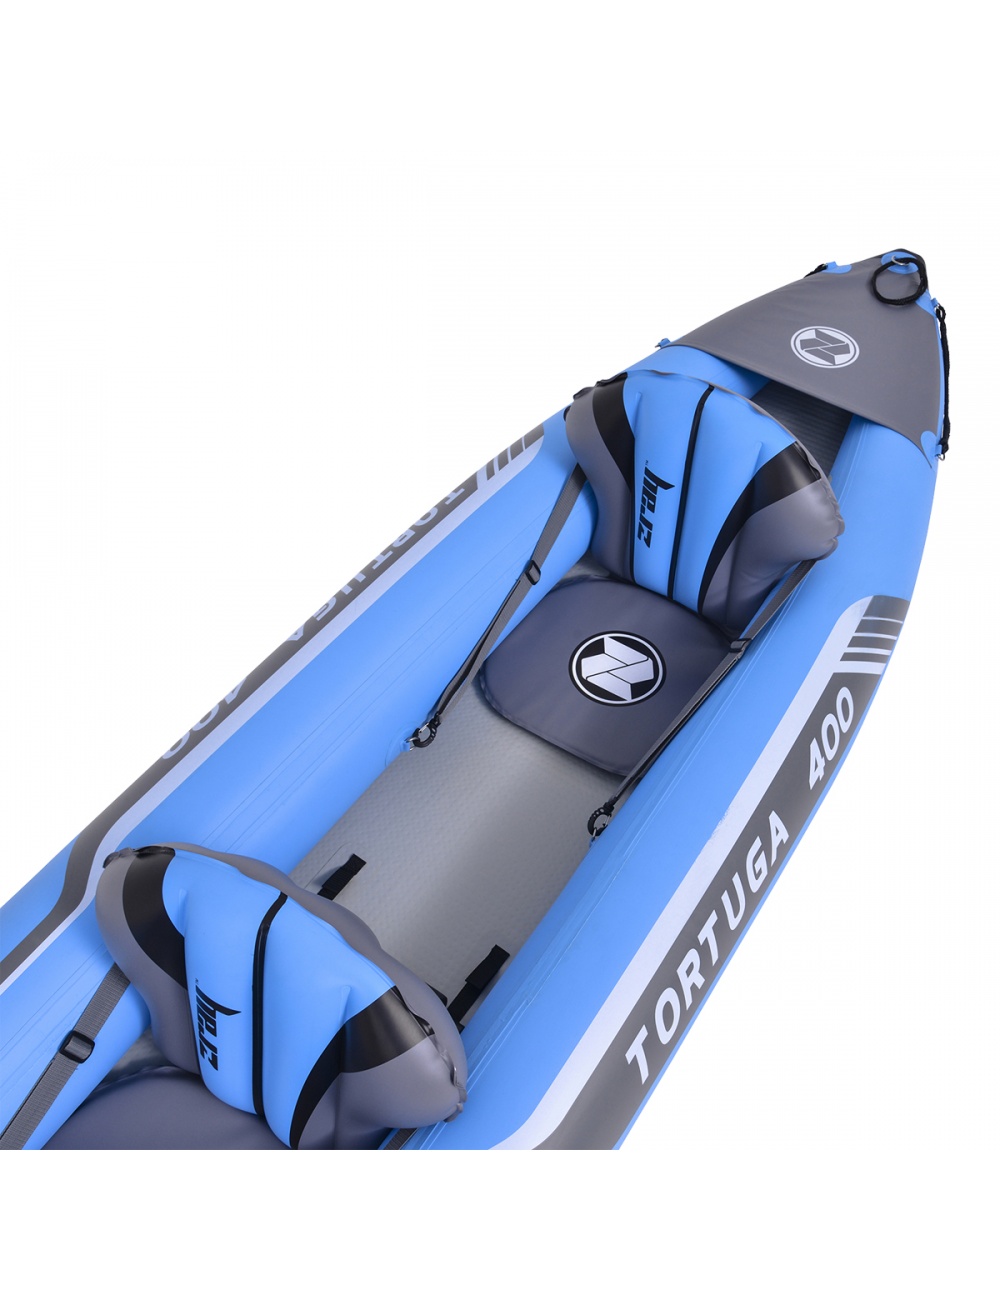 Nuevo Kayak Hinchable Zray Tortuga 400 Modelo 2021 - azul_oscuro - Zray  MKP